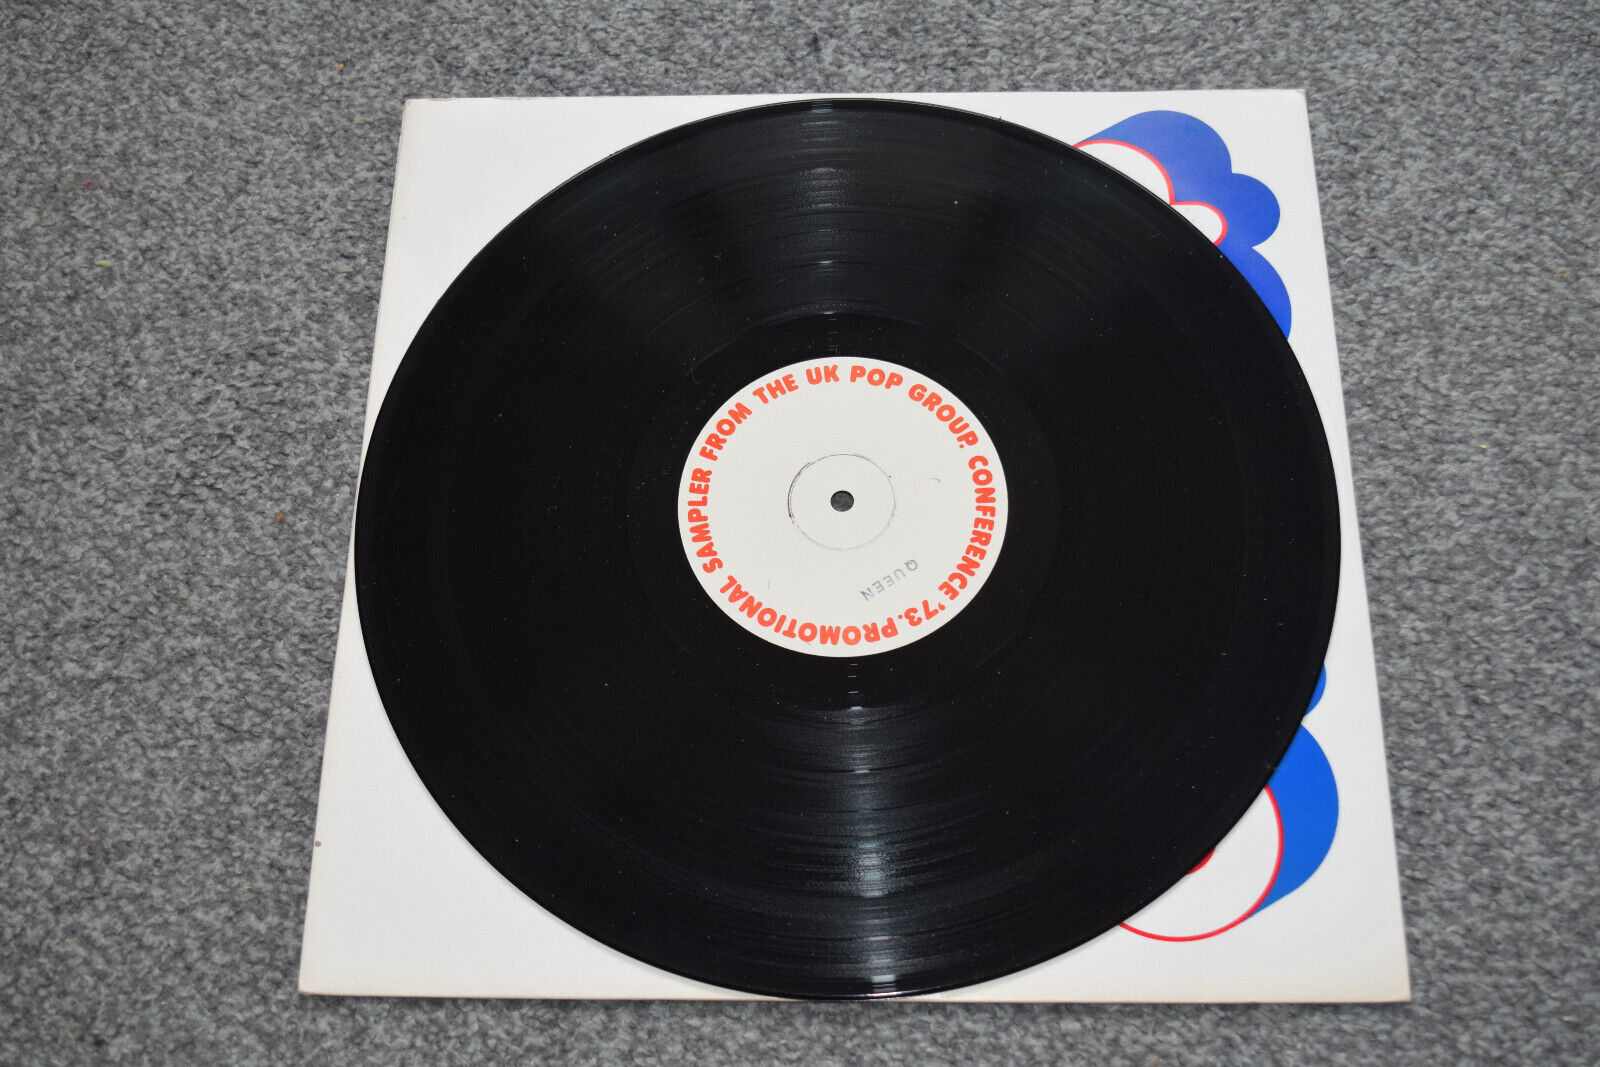 Pic 3 WHITE LABEL promo 12" vinyl LP 73 pop conference sampler Queen first ever vinyl